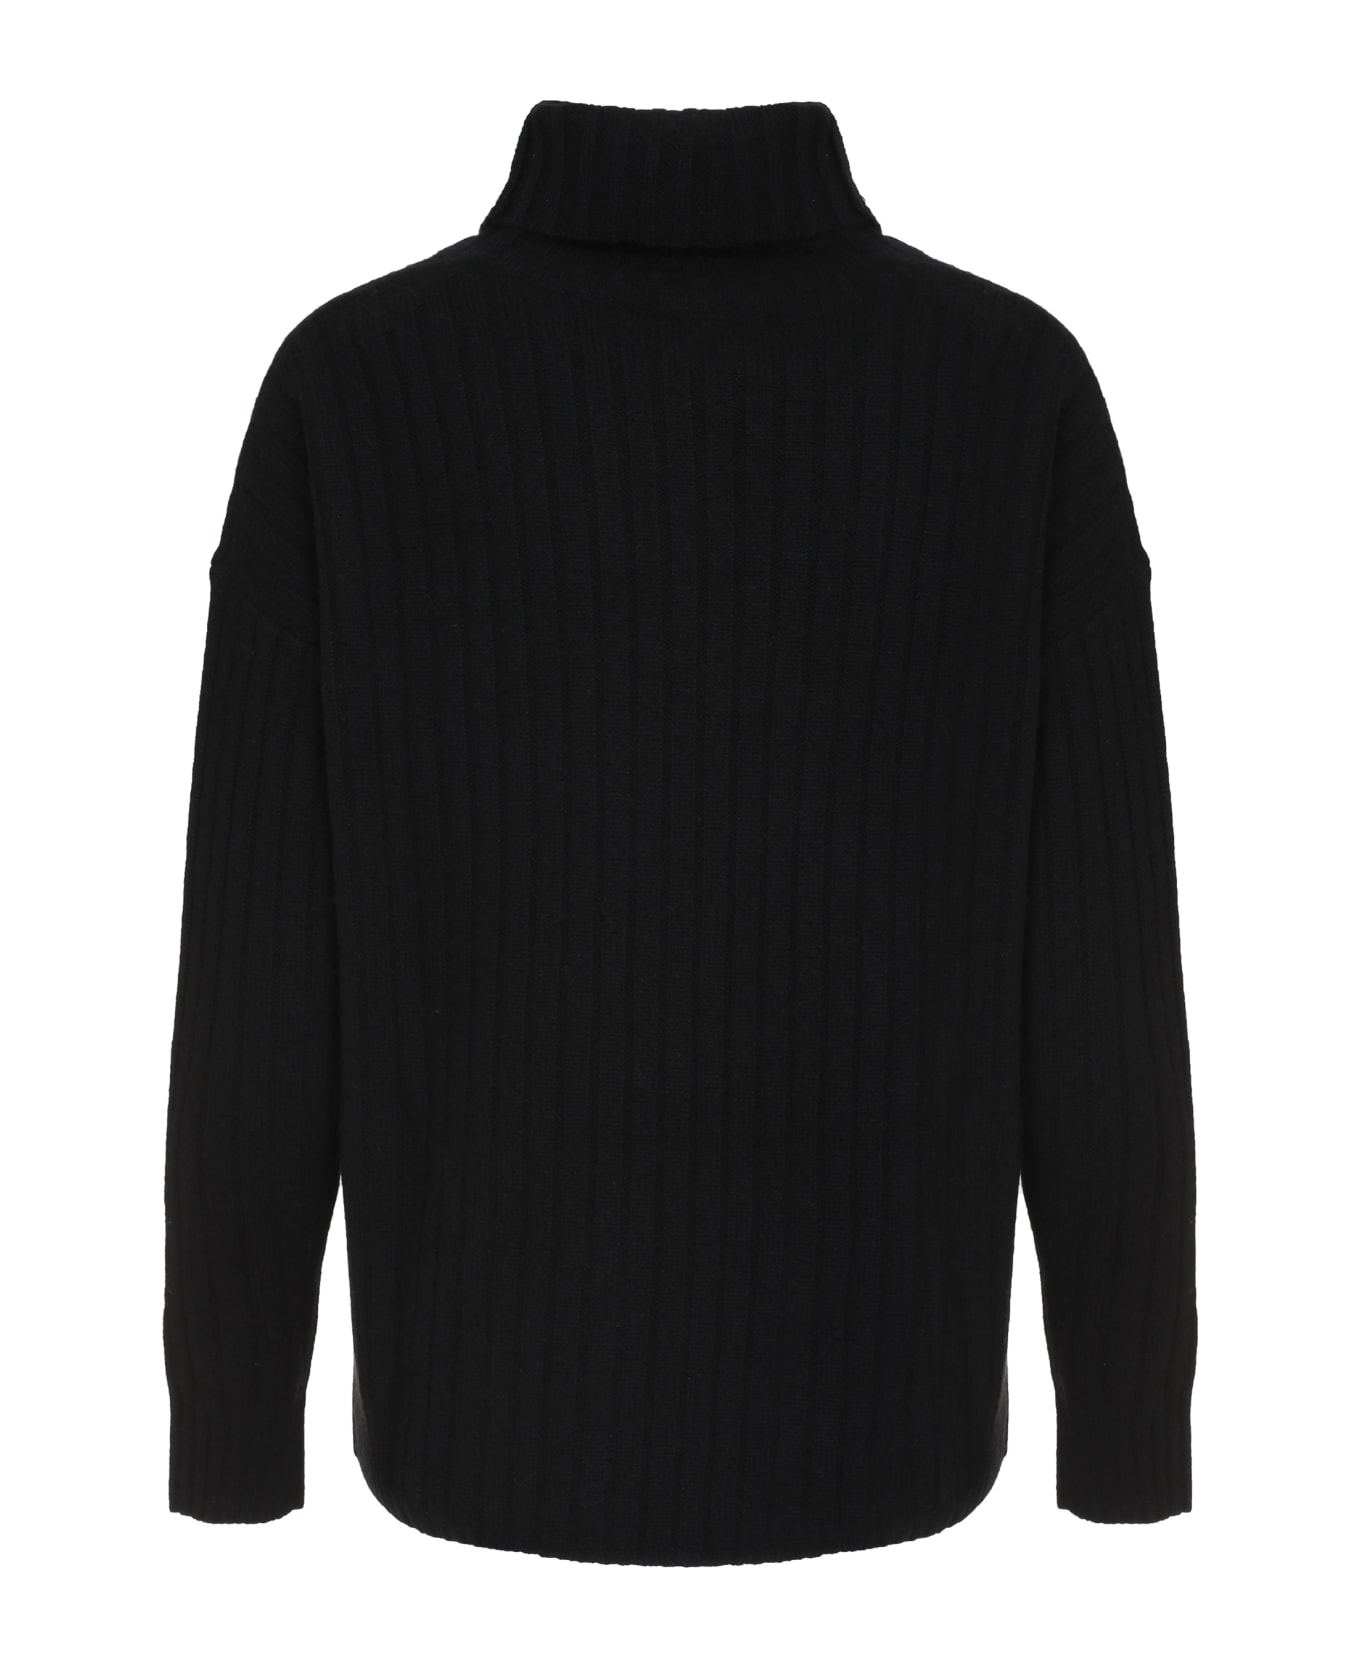 Max Mara Studio Abile Wool And Cashmere Sweater - Black ニットウェア